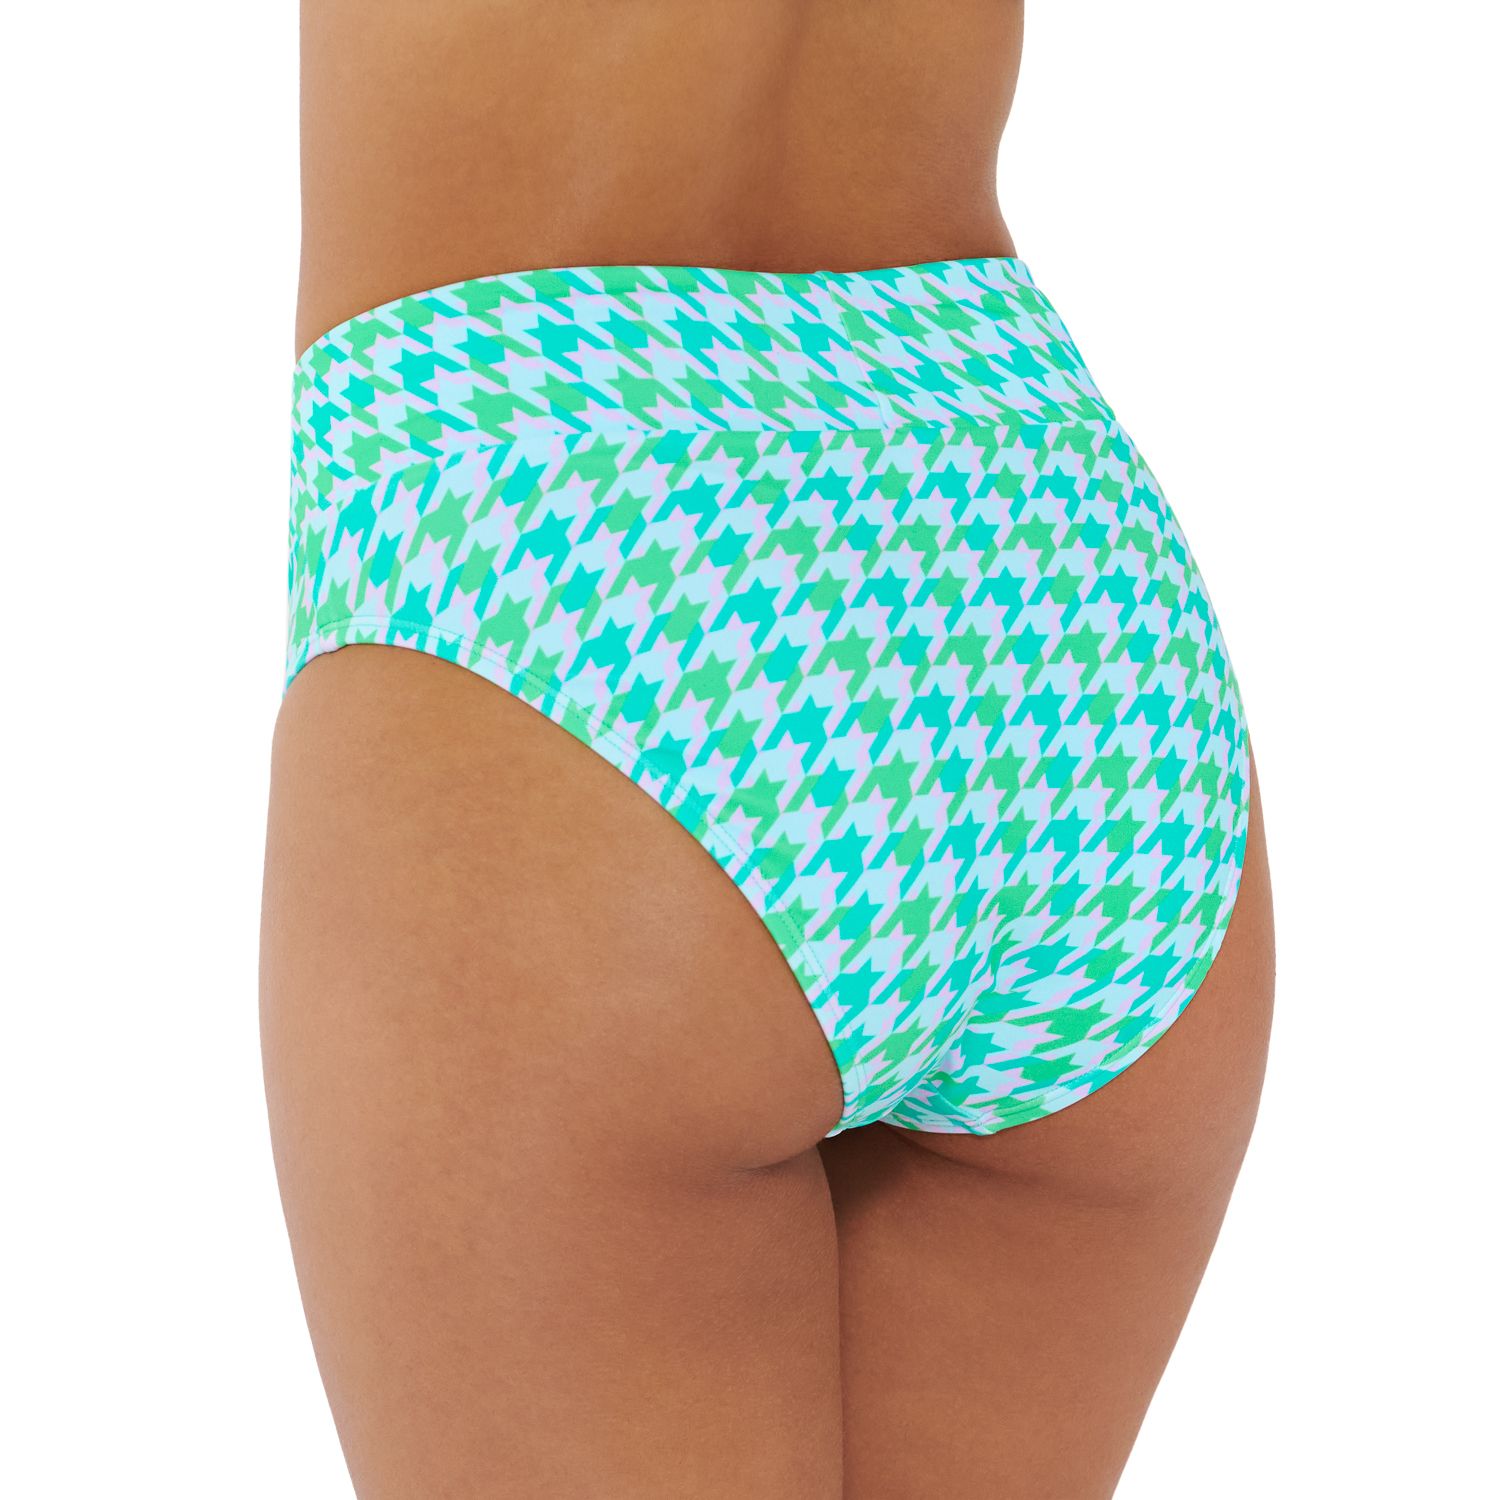 Kohls Blue Swim Suit Bottoms Size M - $9 (40% Off Retail) - From